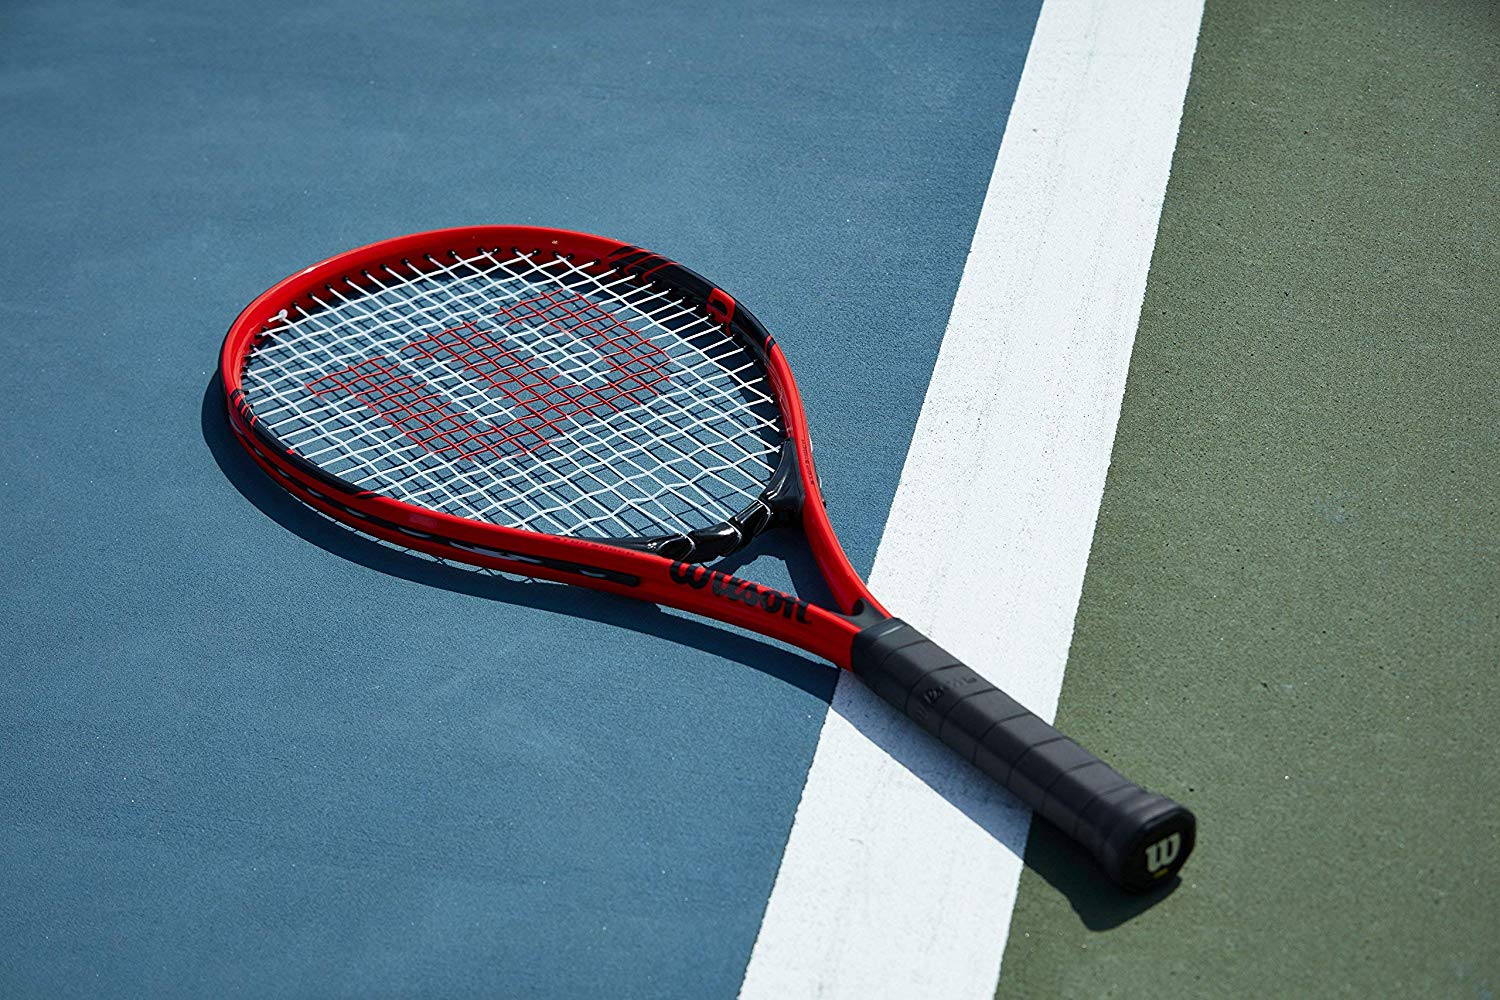 Wilson Federer Adult Tennis Racket Features